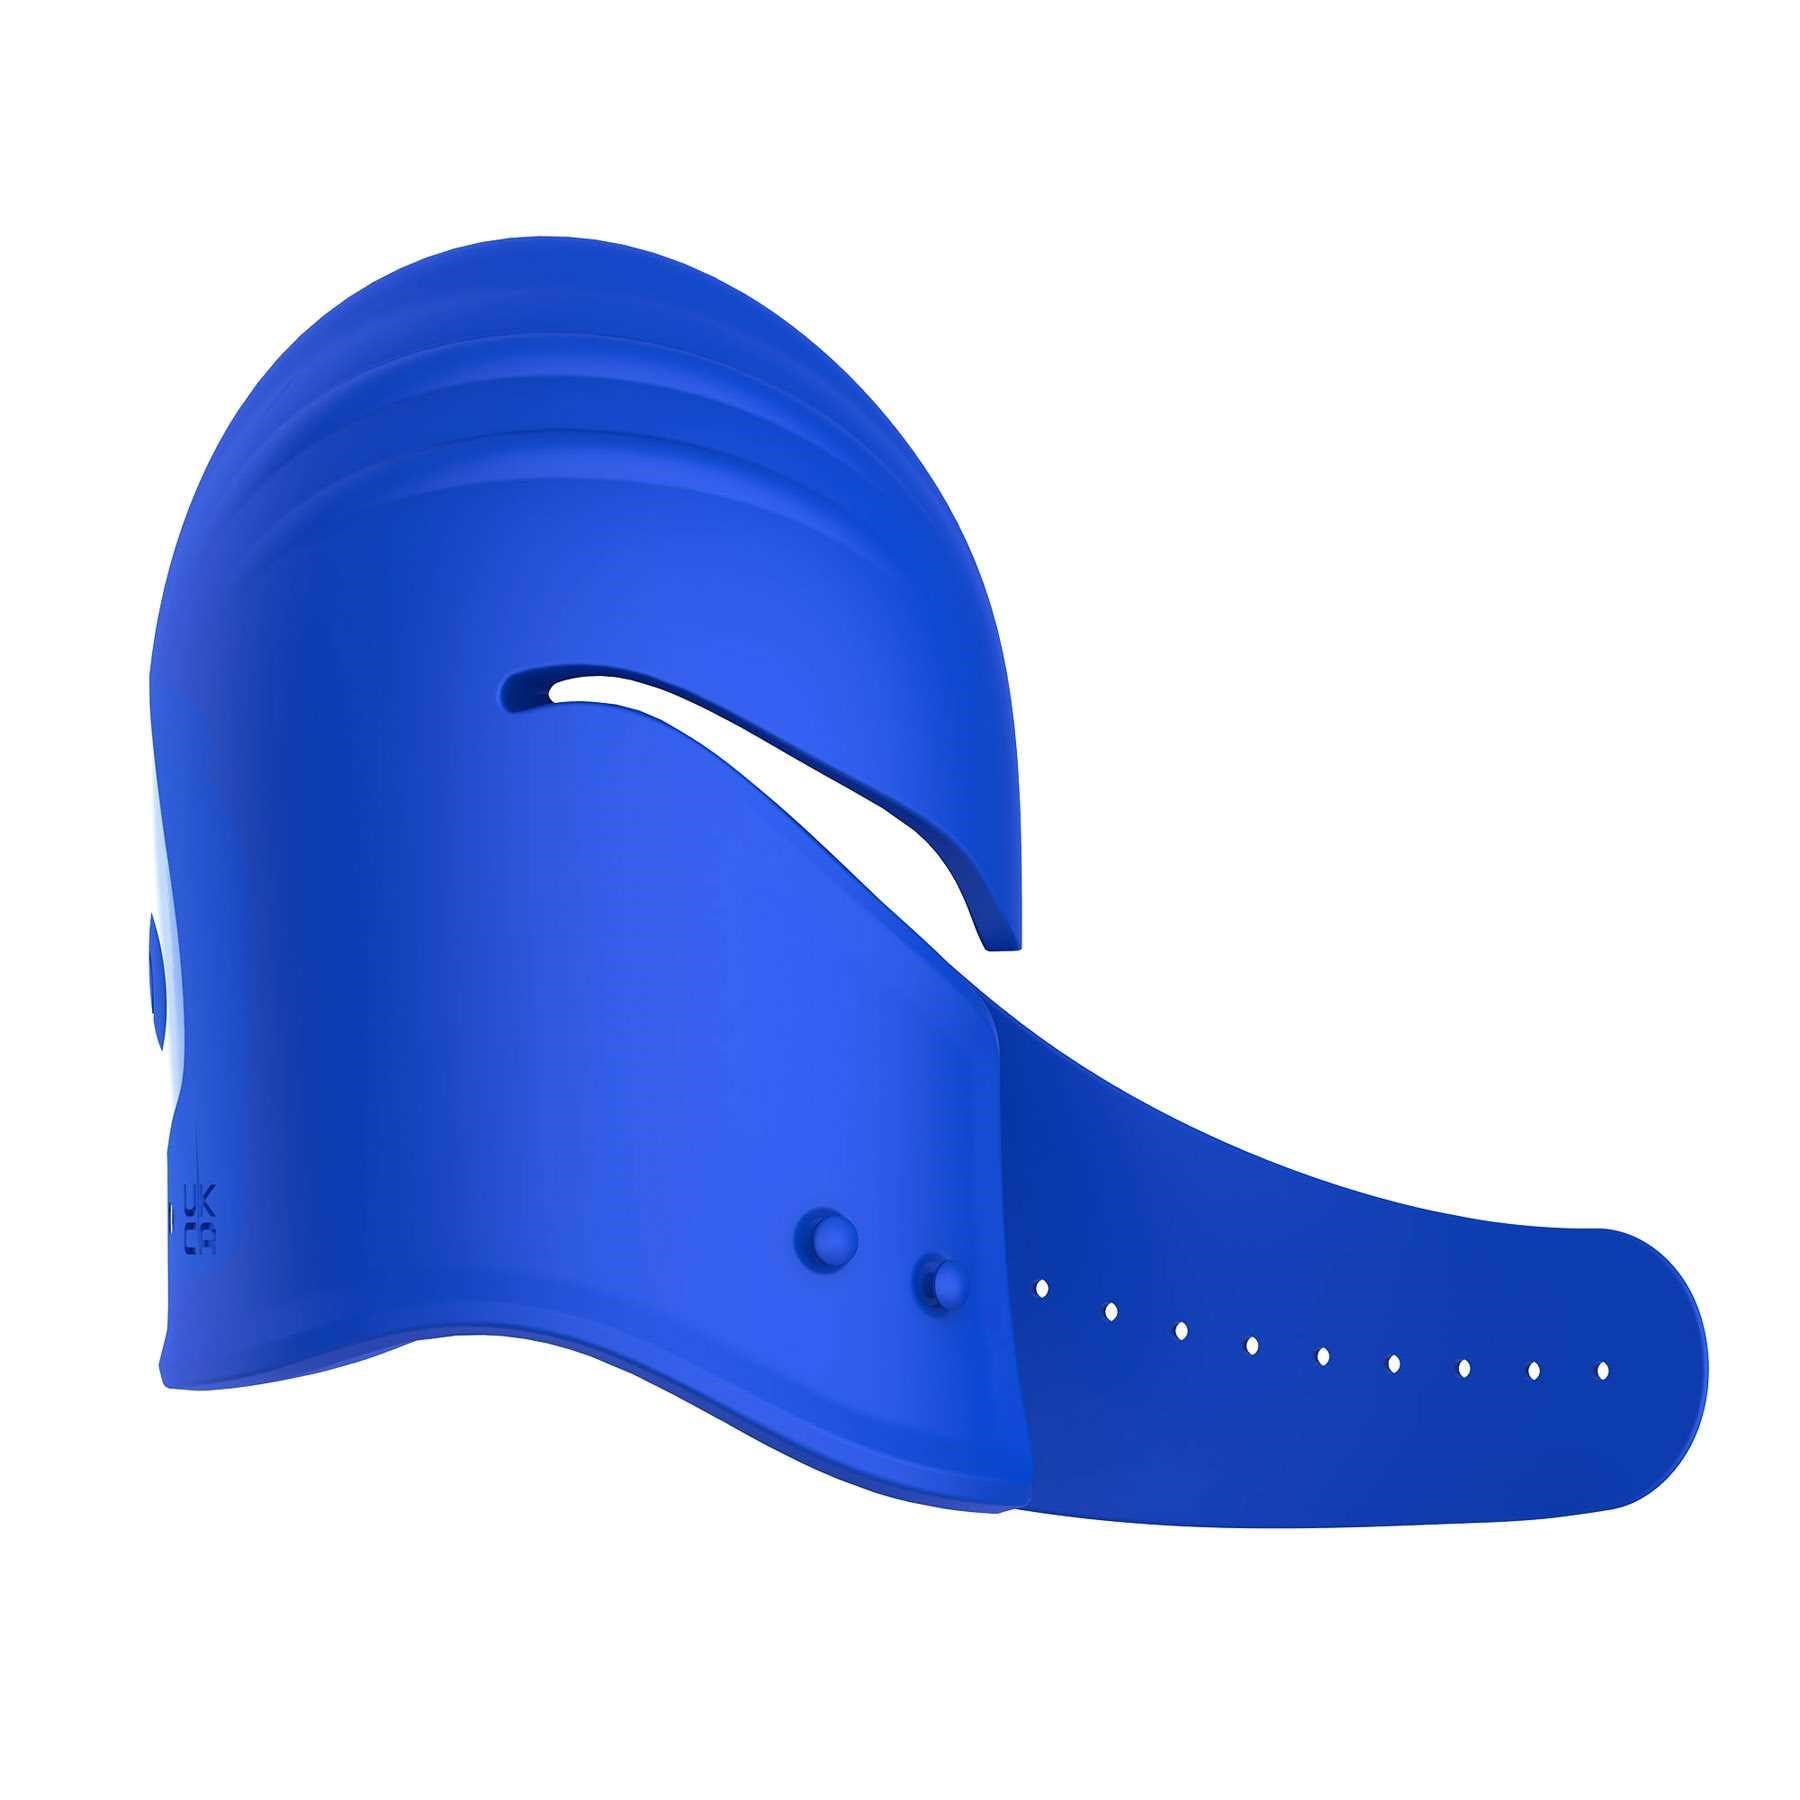 Gladiator Tip Vibrator right facing blue